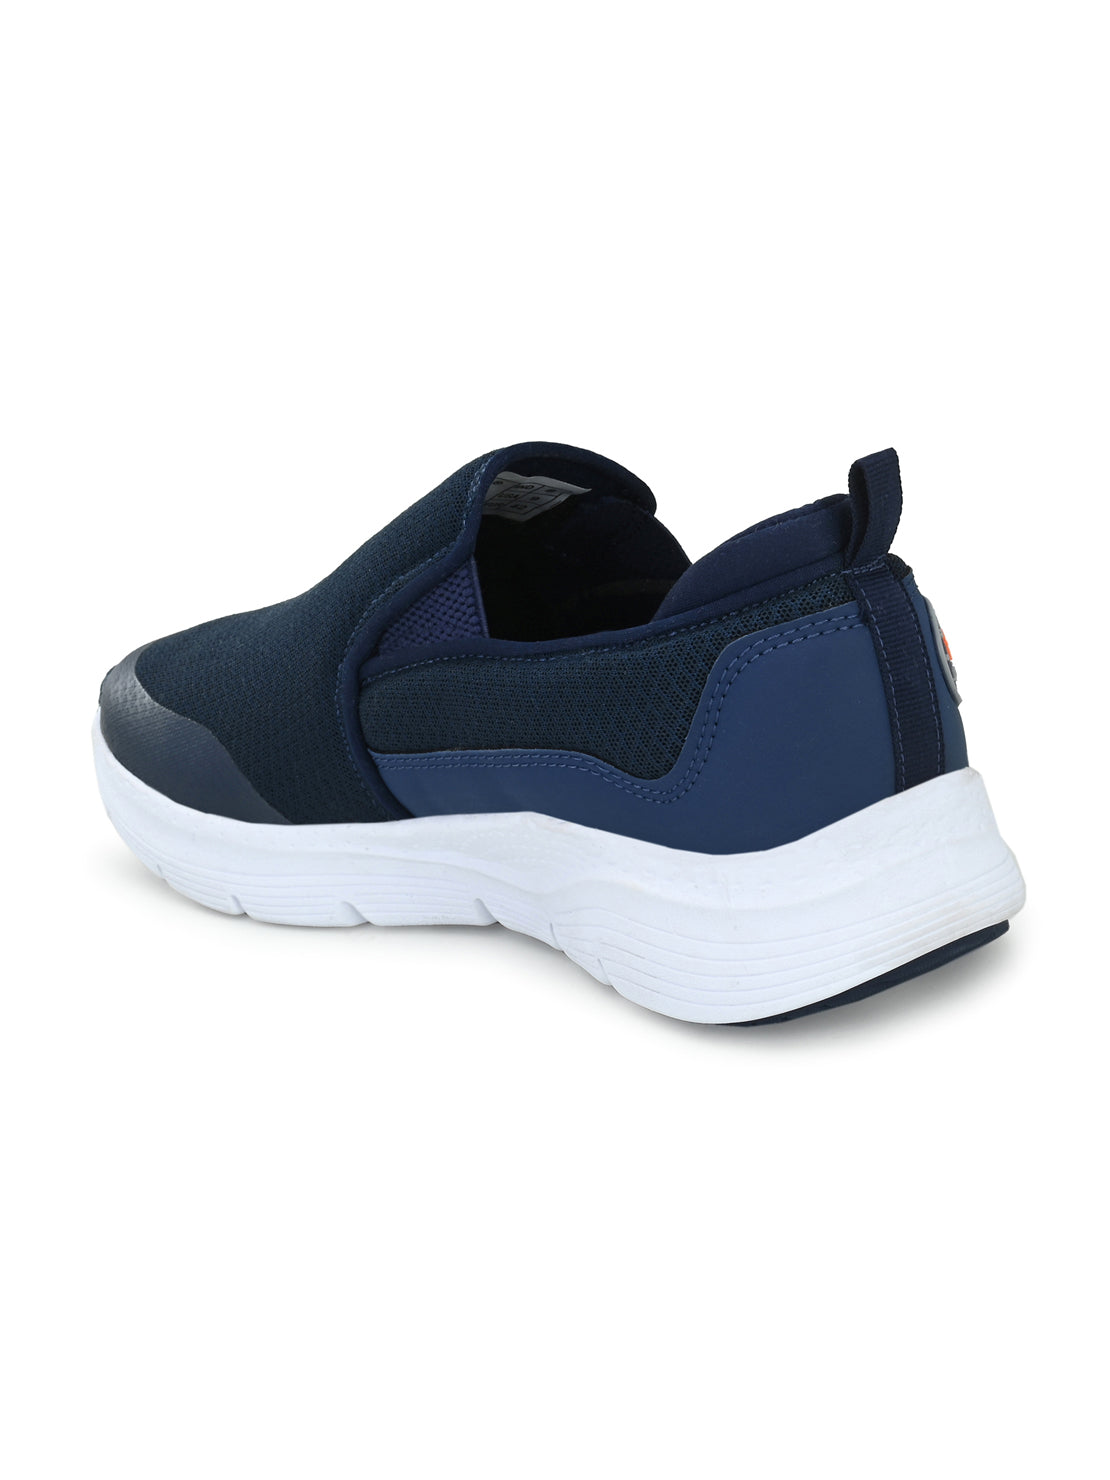 Hirolas® Men's Blue Elite Shock Absorbing Walking Slip On Sport Shoes  (HRLMP02BLU)